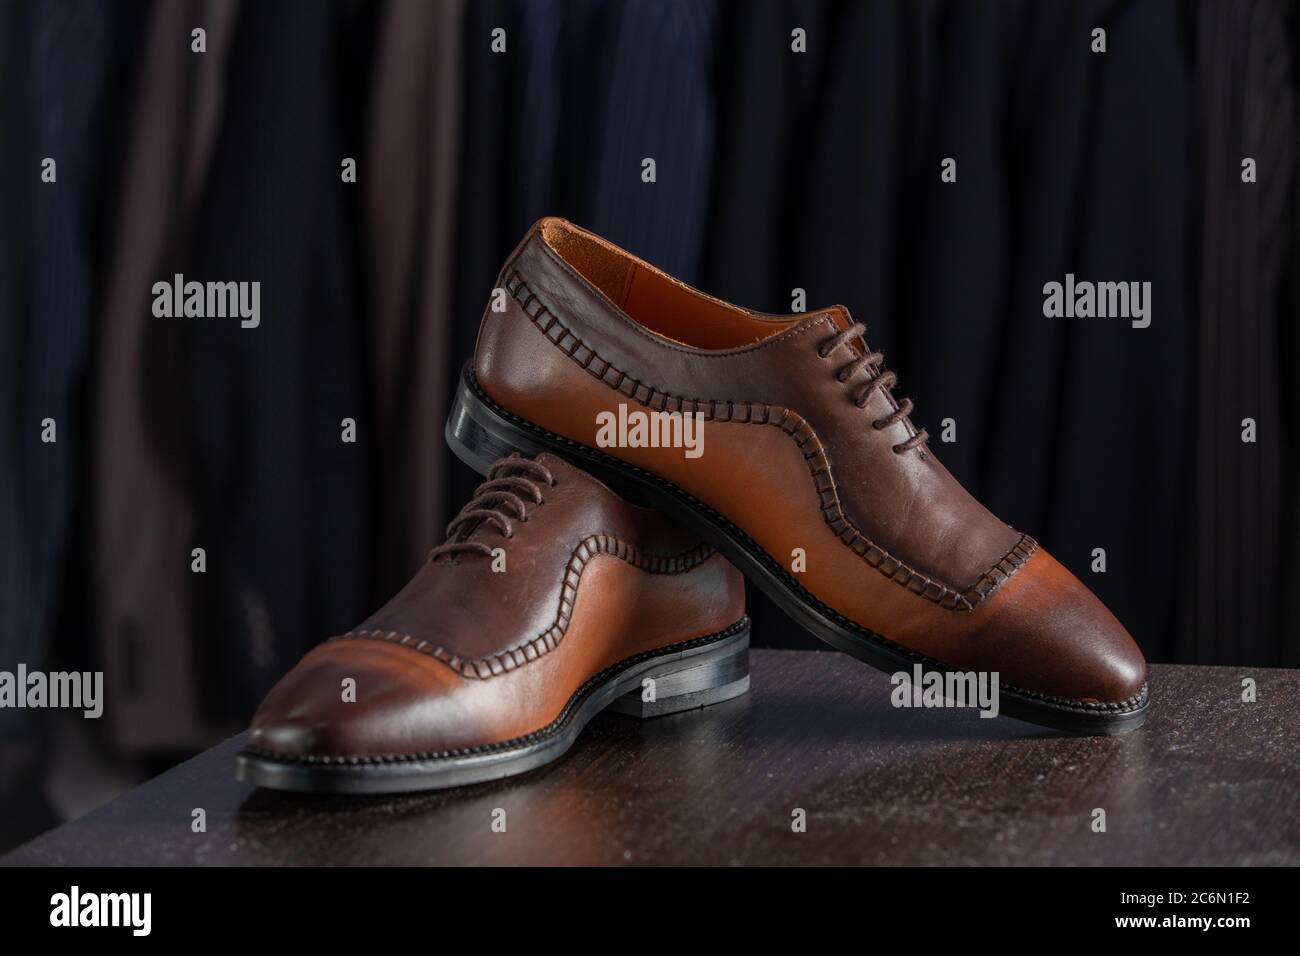 Elegante Leder-Herrenschuhe im Shop. Teure moderne Schuhe für Männer  Stockfotografie - Alamy